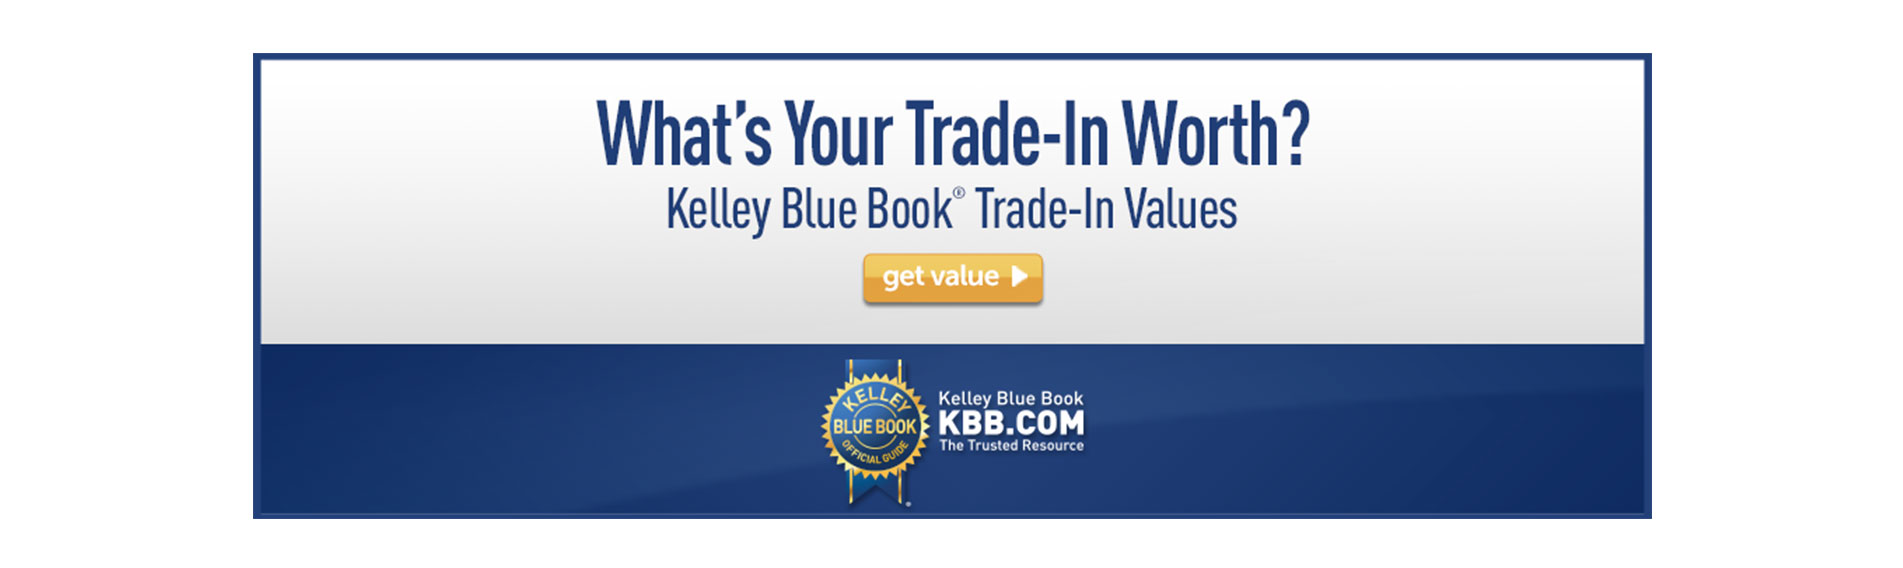 Kelley Blue Book Trade-In Values